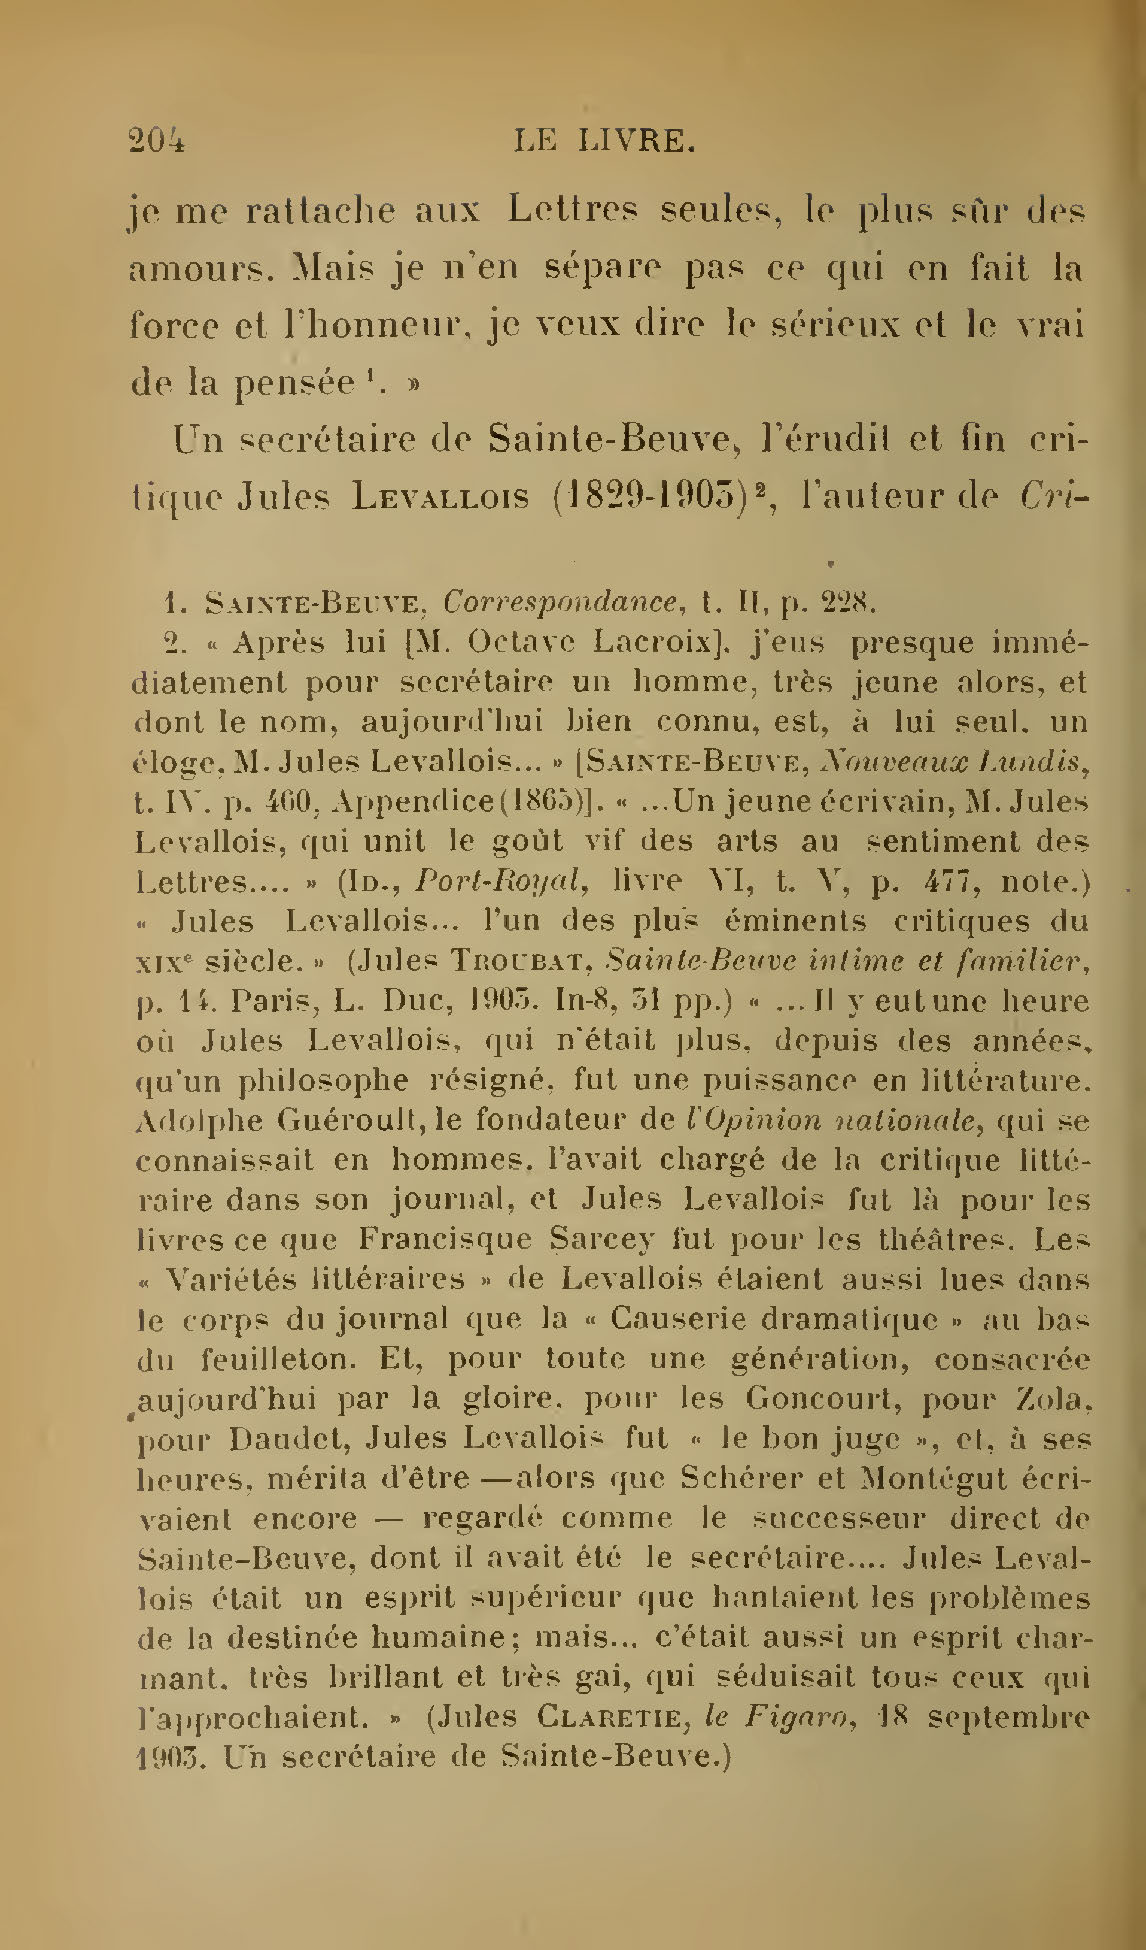 Albert Cim, Le Livre, t. I, p. 204.